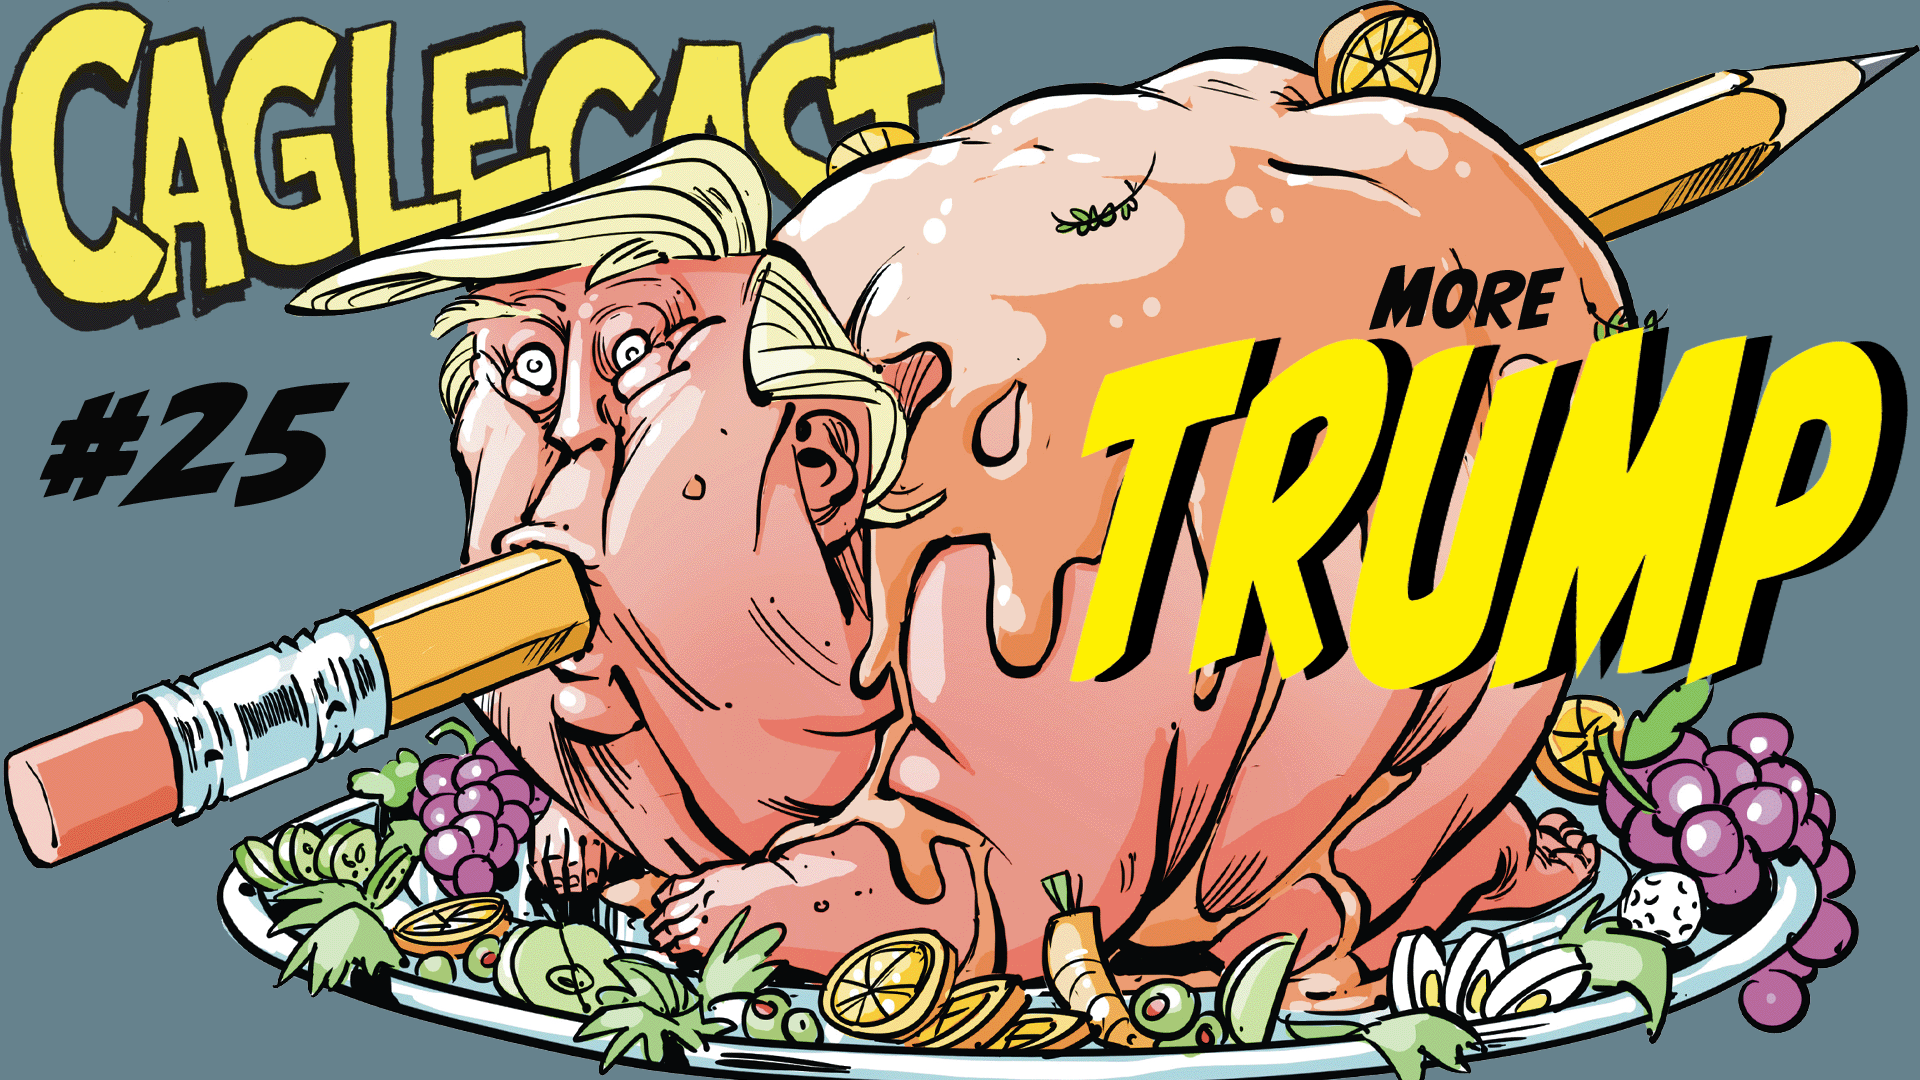 More TRUMP Cartoons! Our Favorite Trump-Roasting Cartoons from MORE Brilliant Political Cartoonists! #25 poster